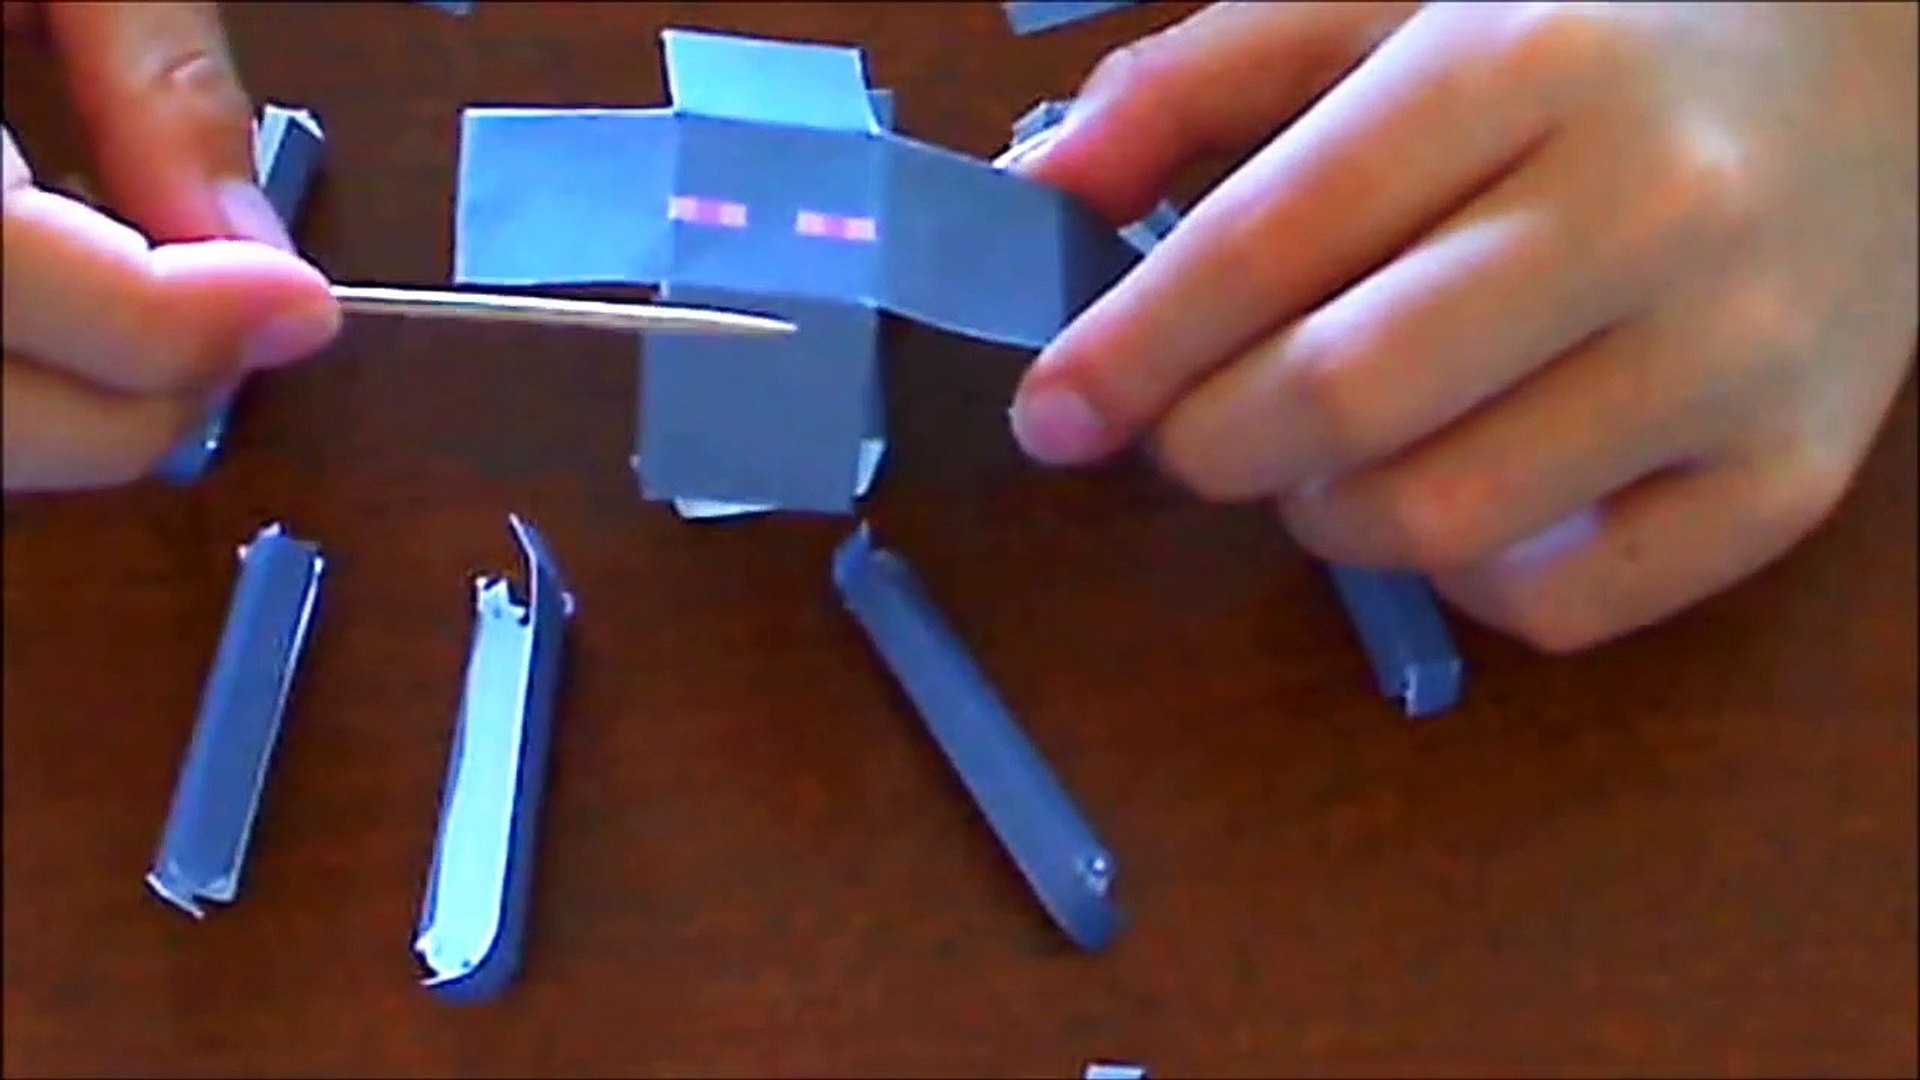 Enderman Minecraft Paper Craft Model